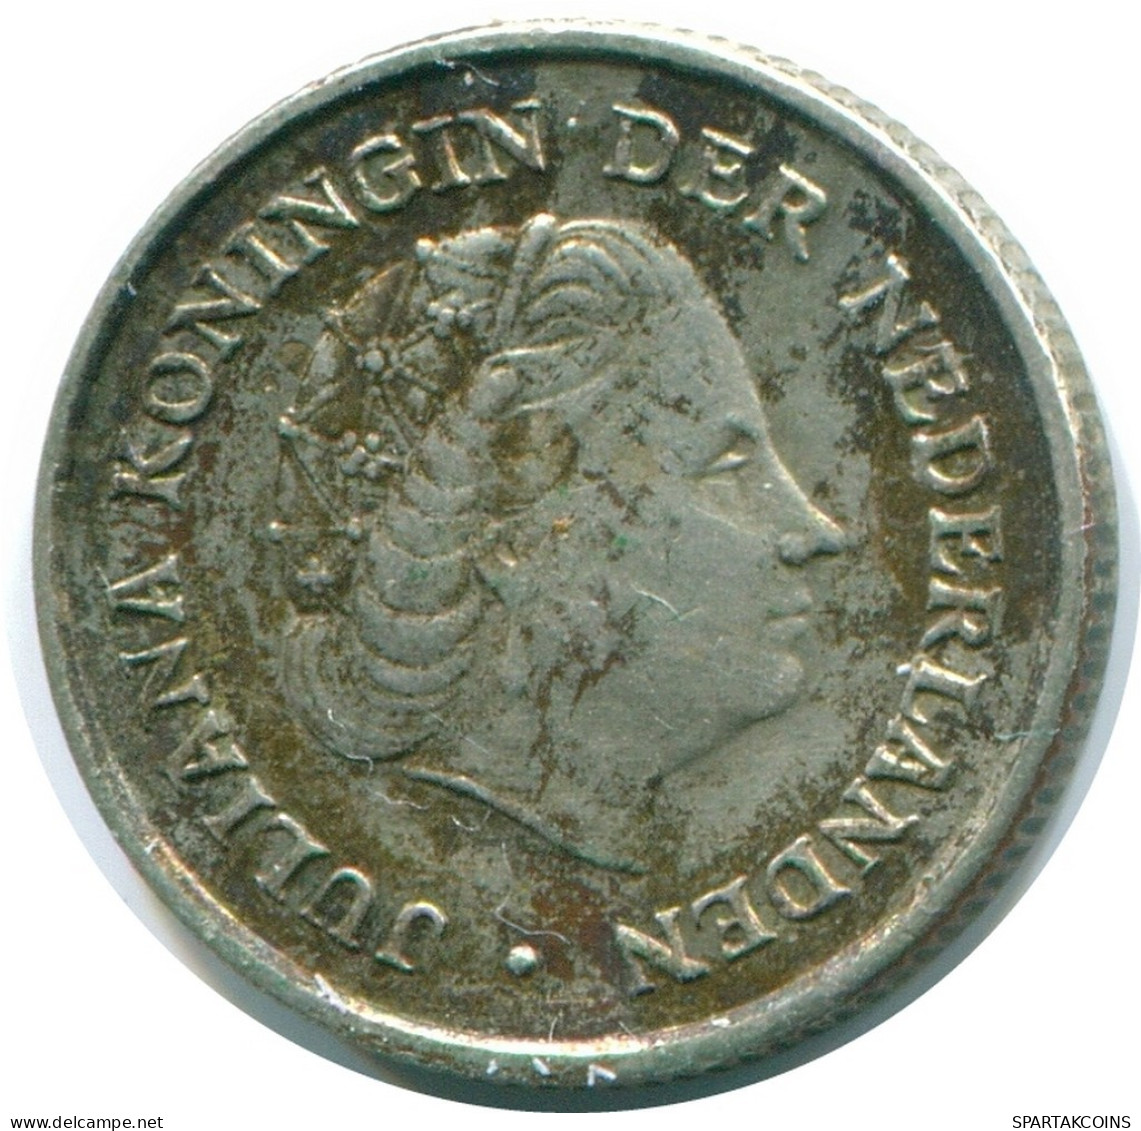 1/10 GULDEN 1960 NETHERLANDS ANTILLES SILVER Colonial Coin #NL12338.3.U.A - Netherlands Antilles